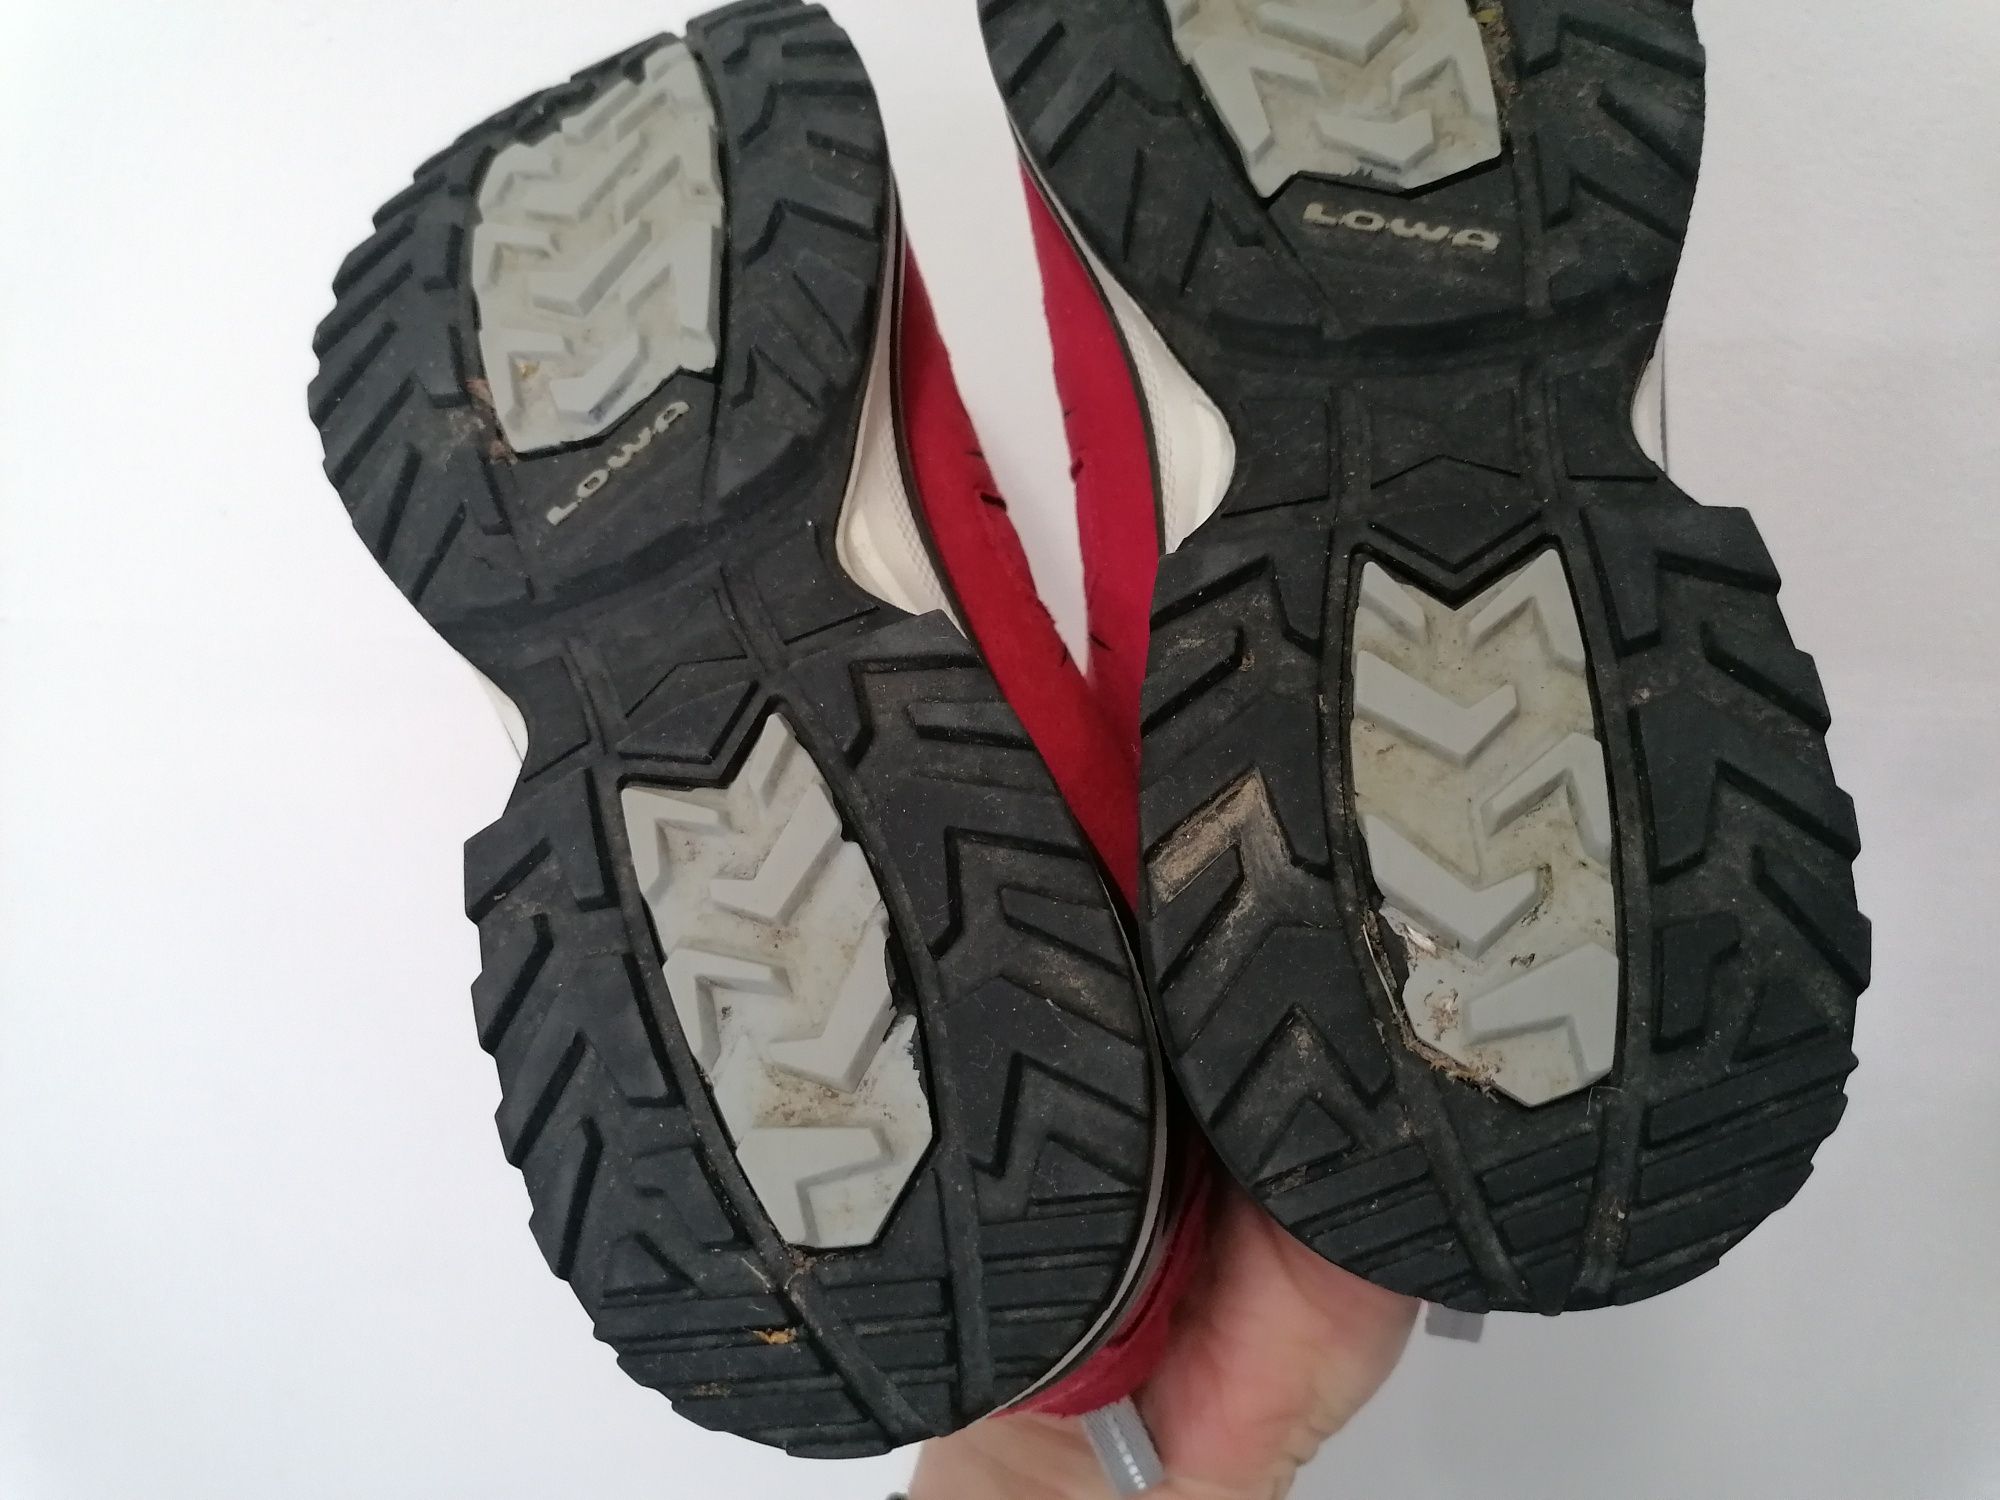 Adidasi Lowa Gore-Tex mărimea 40 talpic 26,5 cm - Ca noi